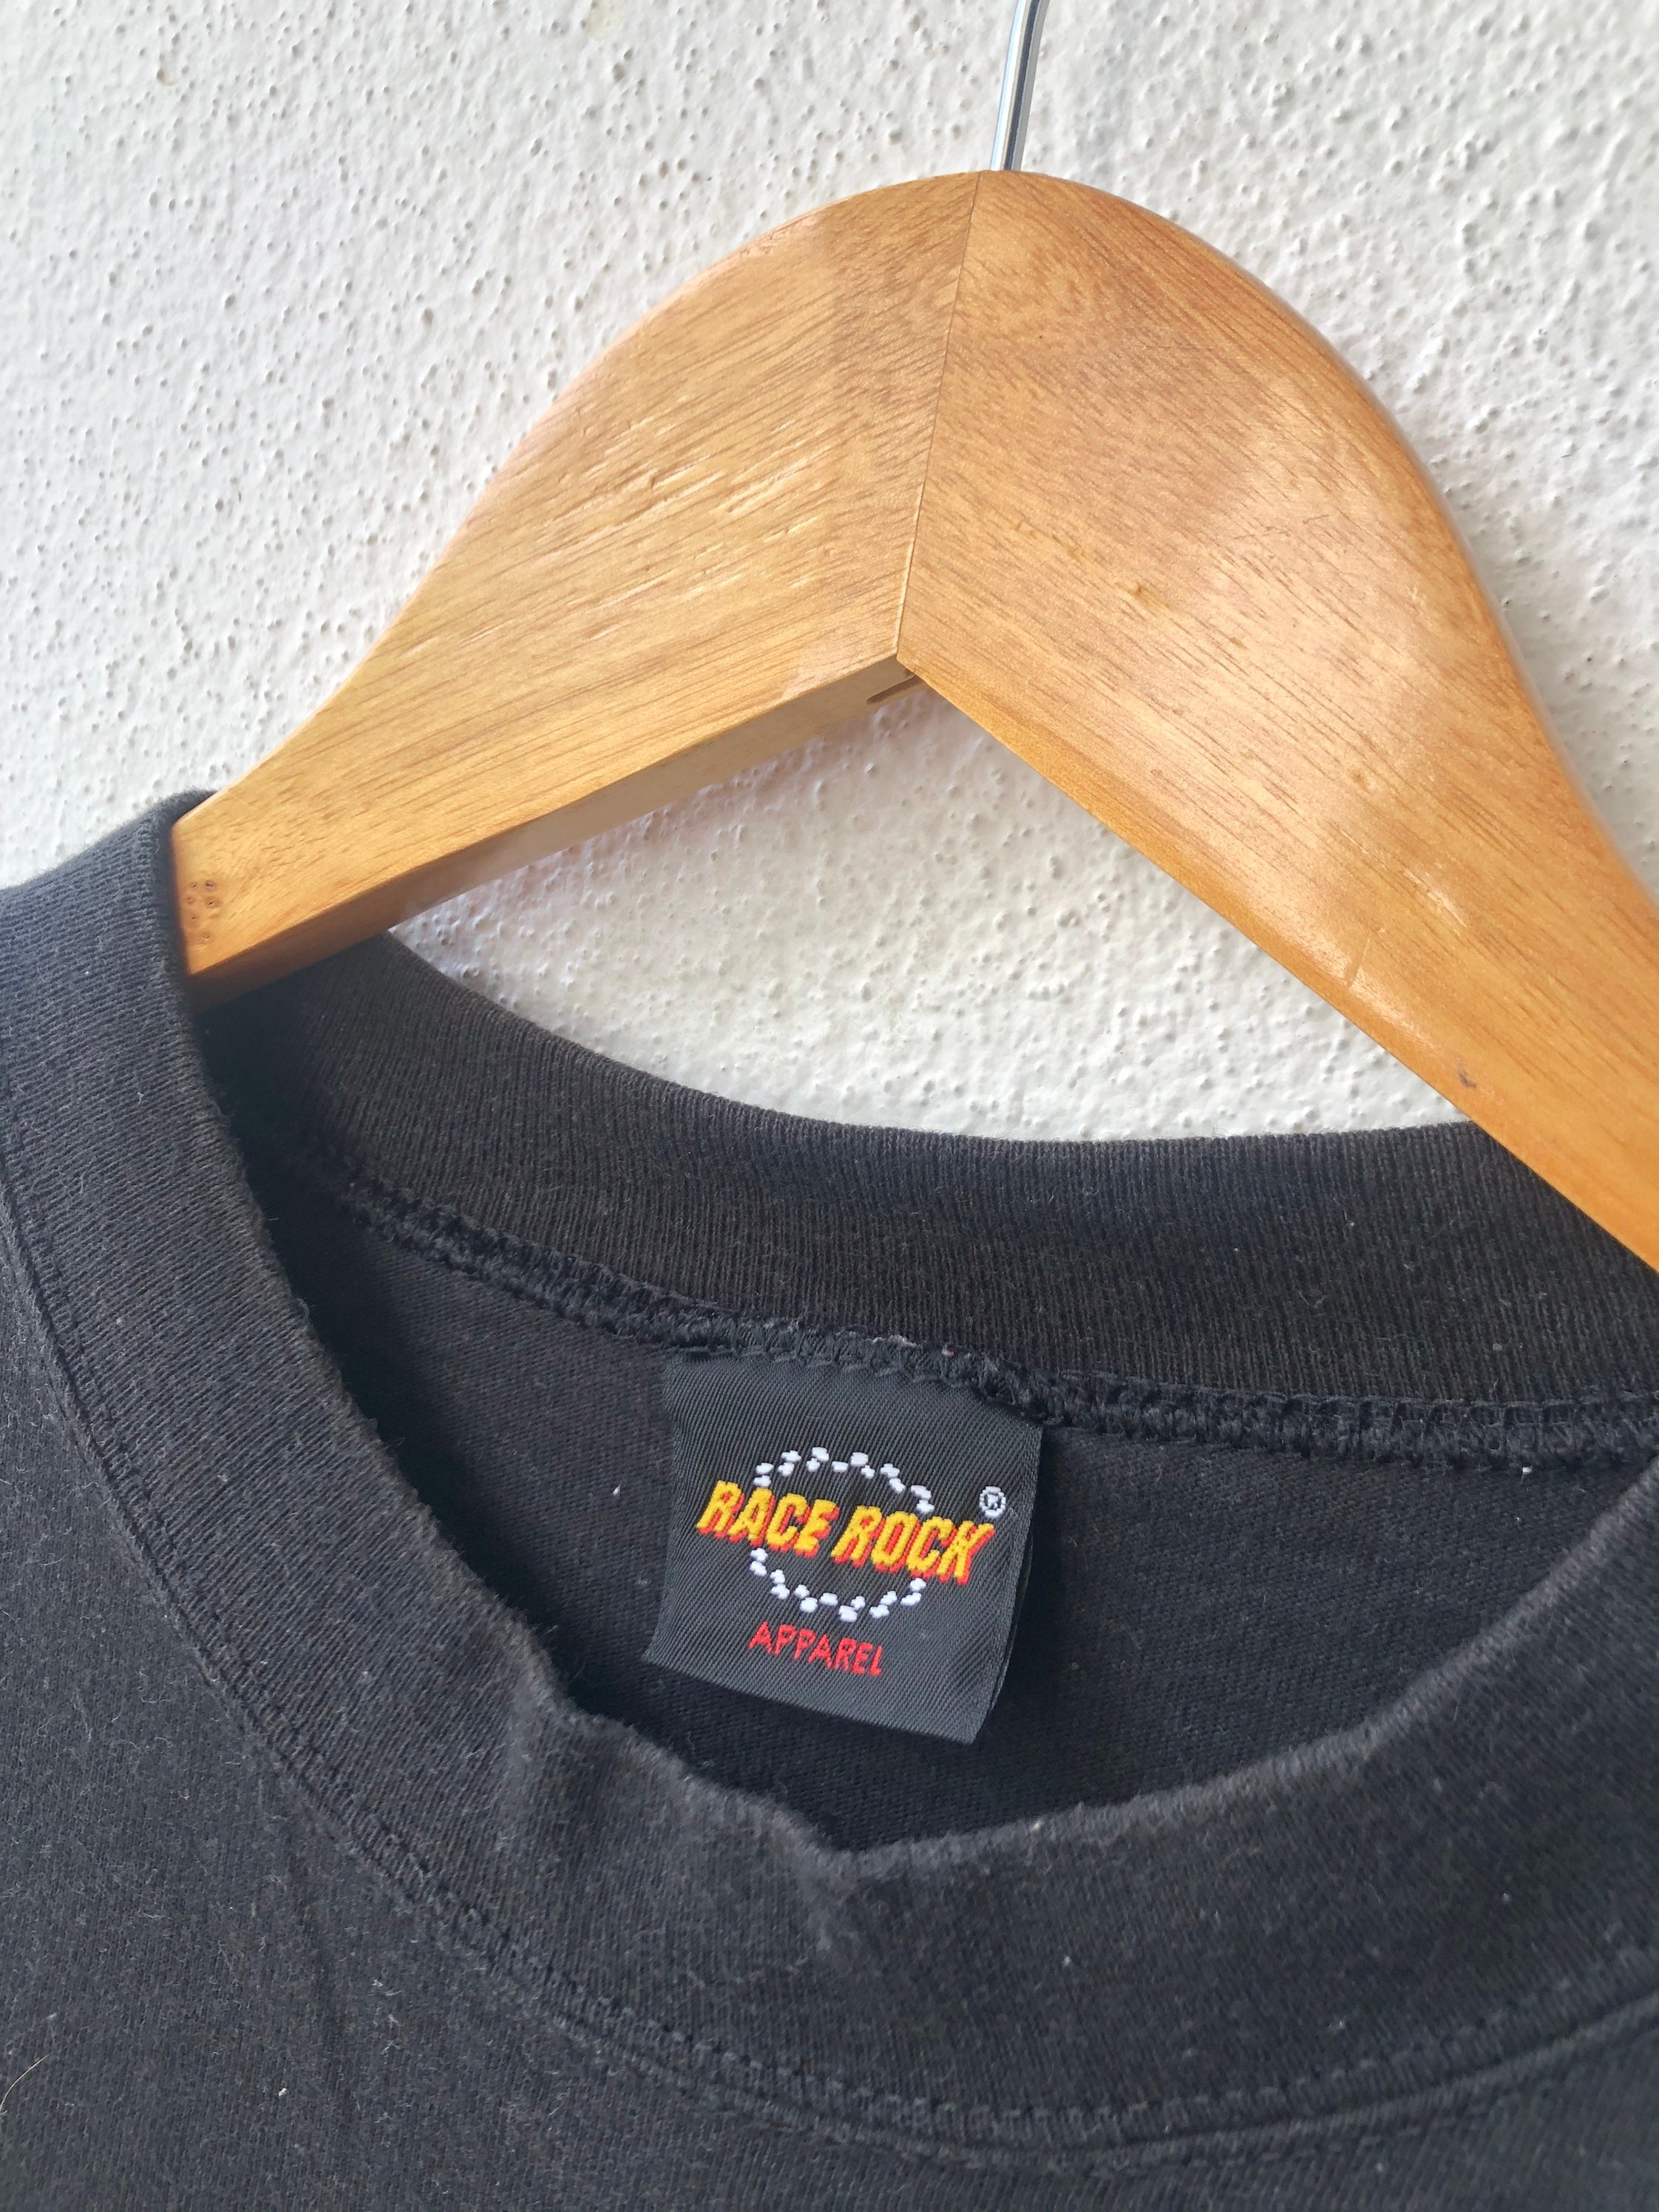 Vintage Original 90s Race Rock Orlando Cafe Merch T-shirt - Etsy